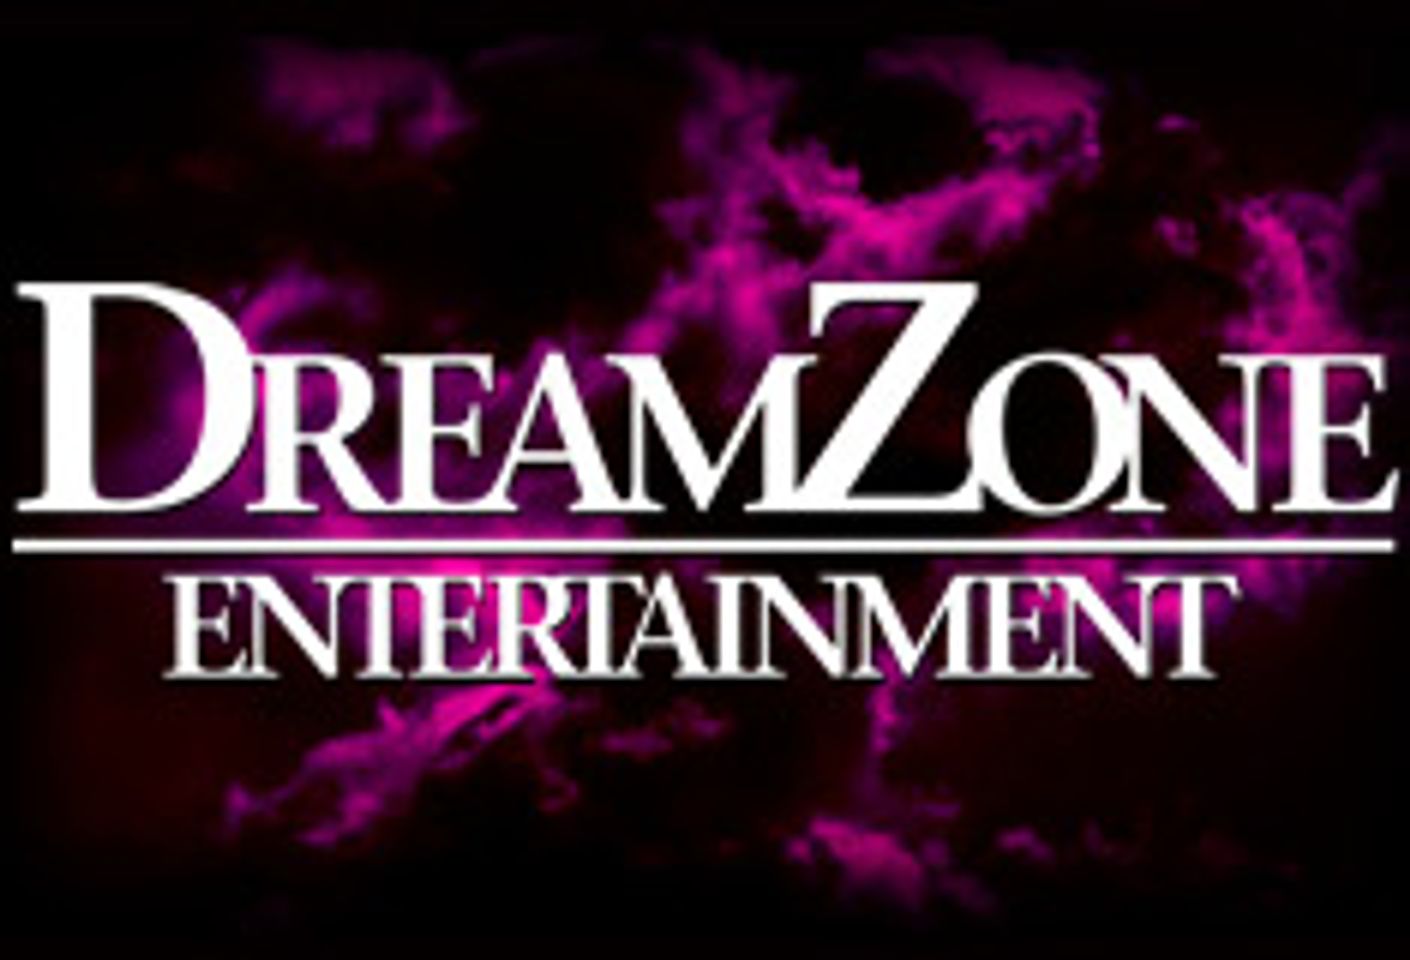 DreamZone Entertainment Receives 10 AVN Award Nominations